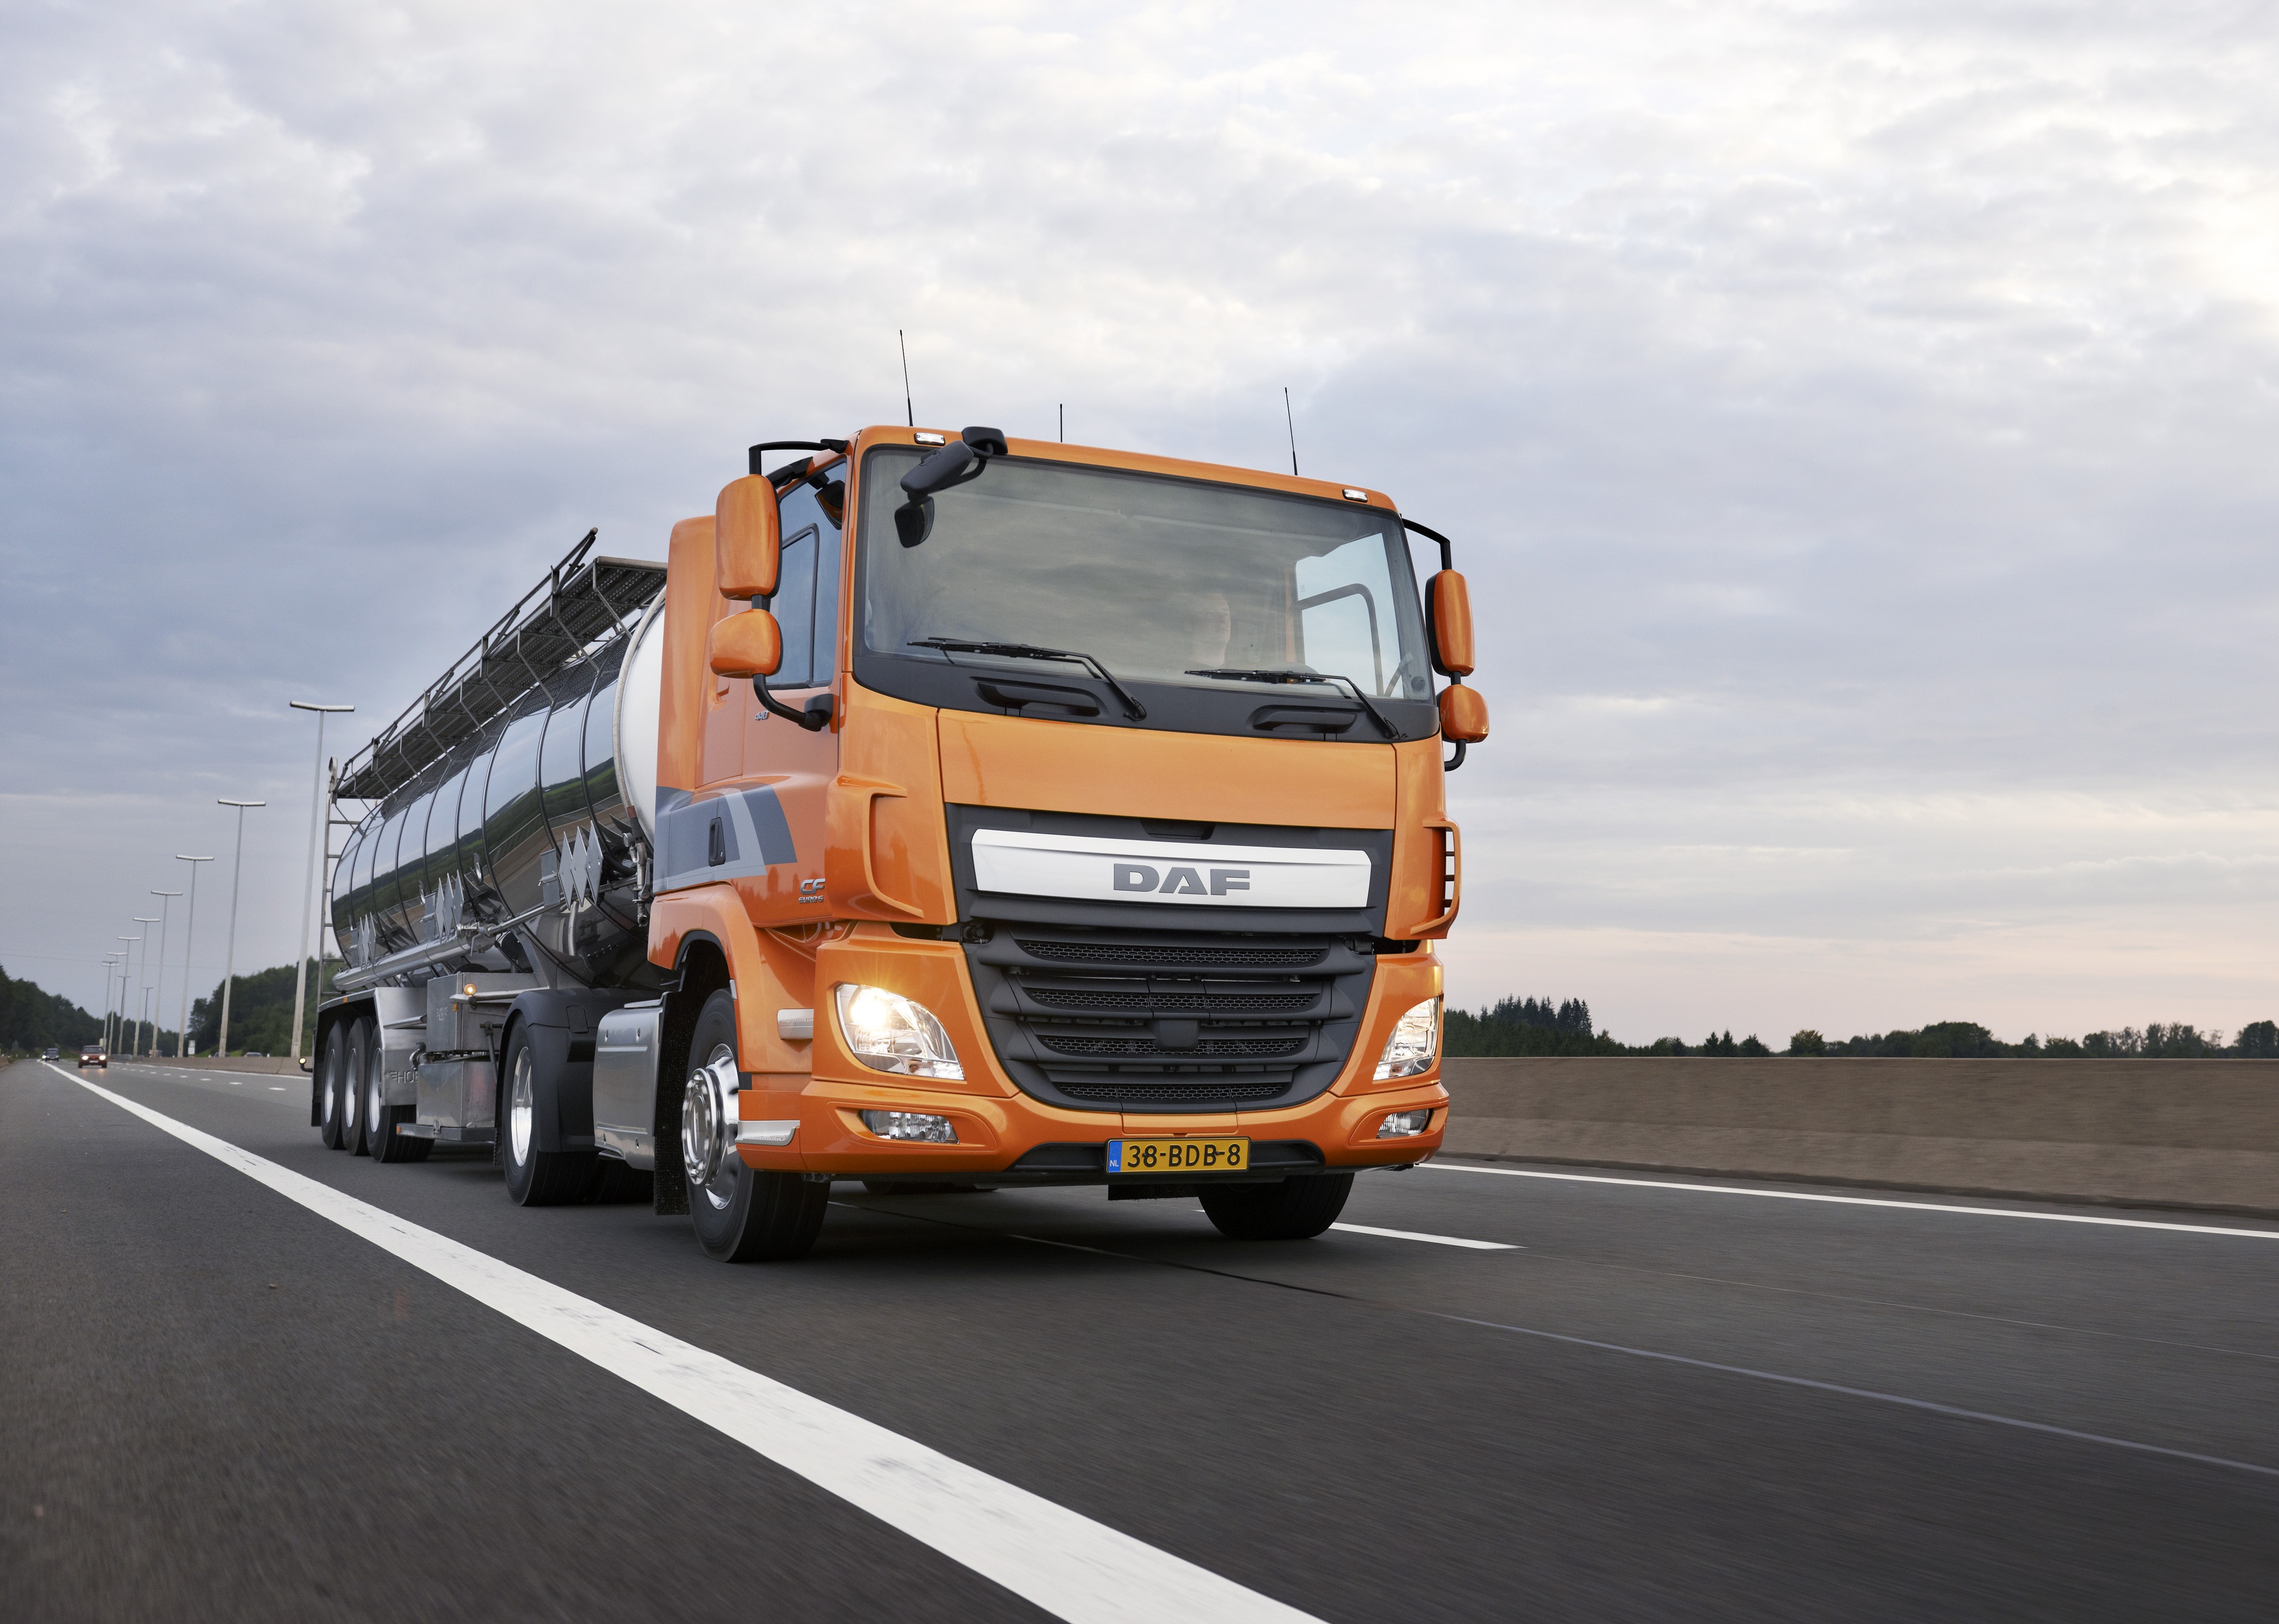 General 3579x2551 road asphalt vehicle truck orange trucks (vehicle) heavy equipment